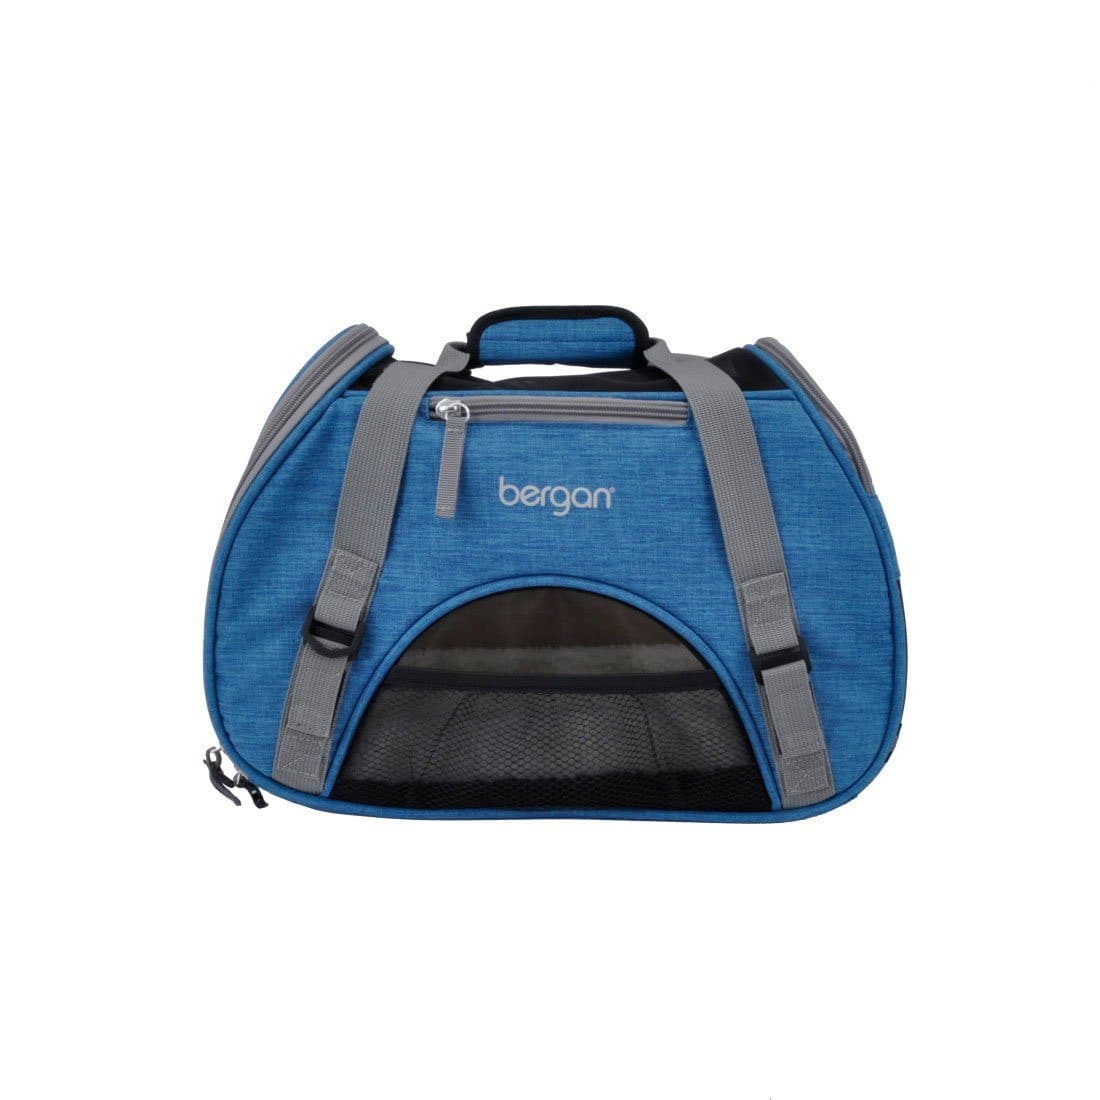 Transportadora Comfort en Colores Azul - Comfort Carrier de Bergan®